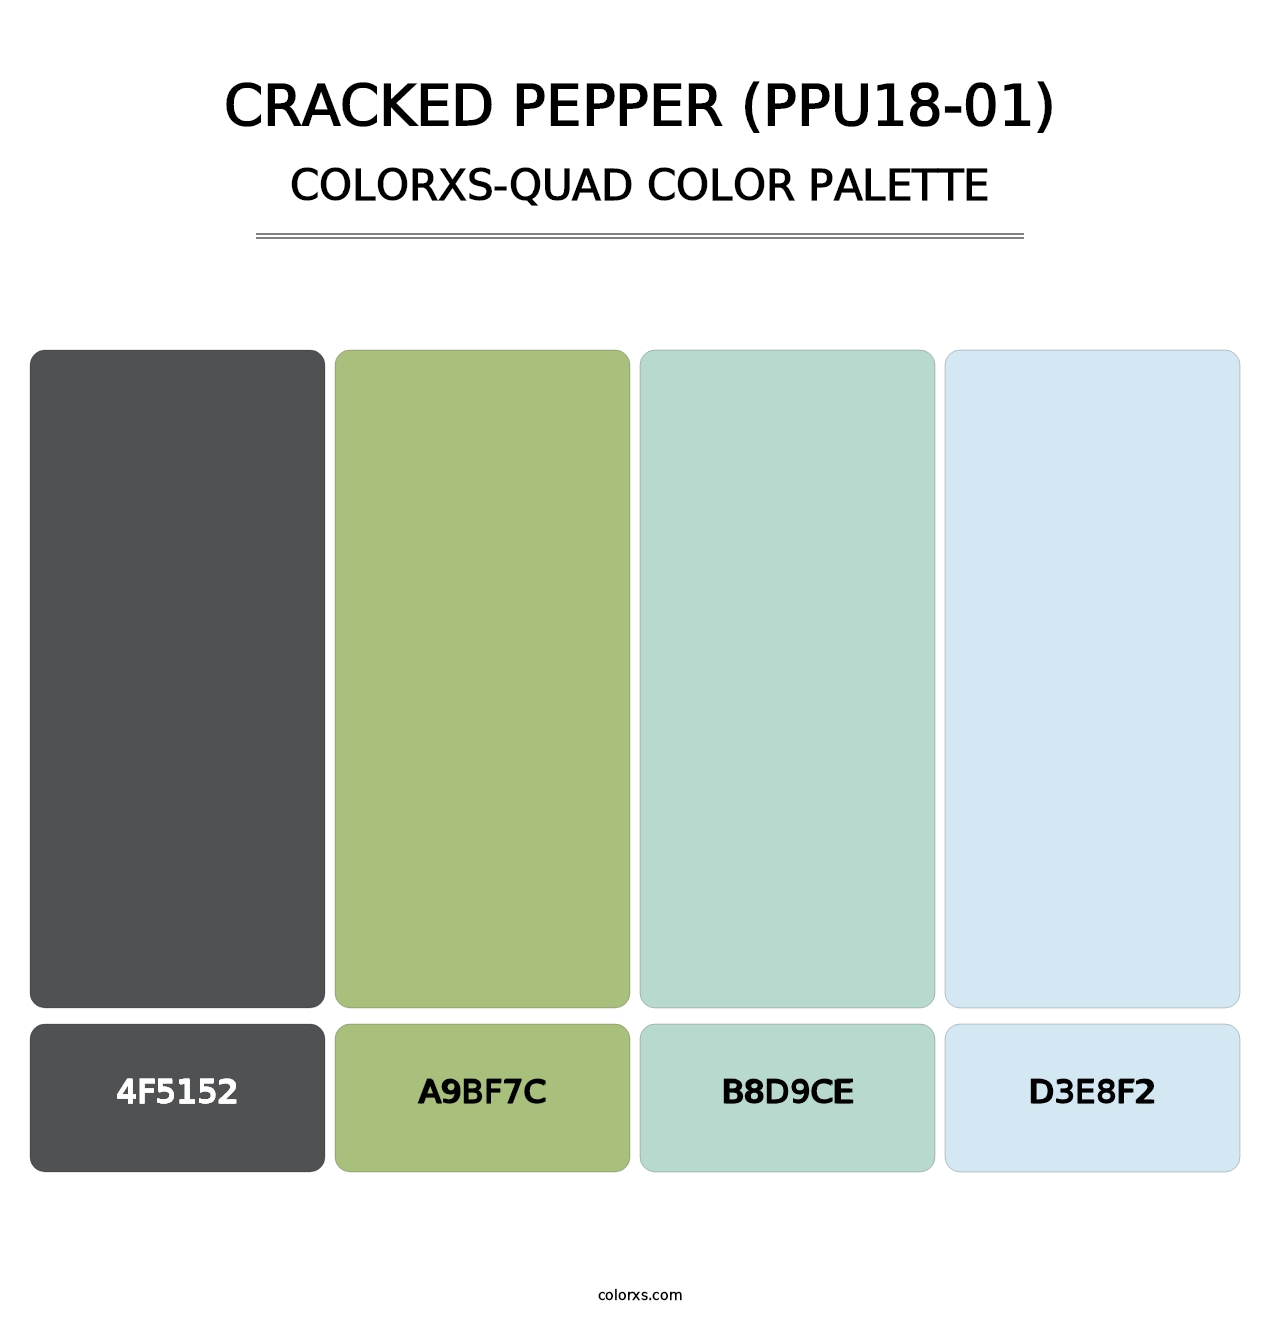 Cracked Pepper (PPU18-01) - Colorxs Quad Palette